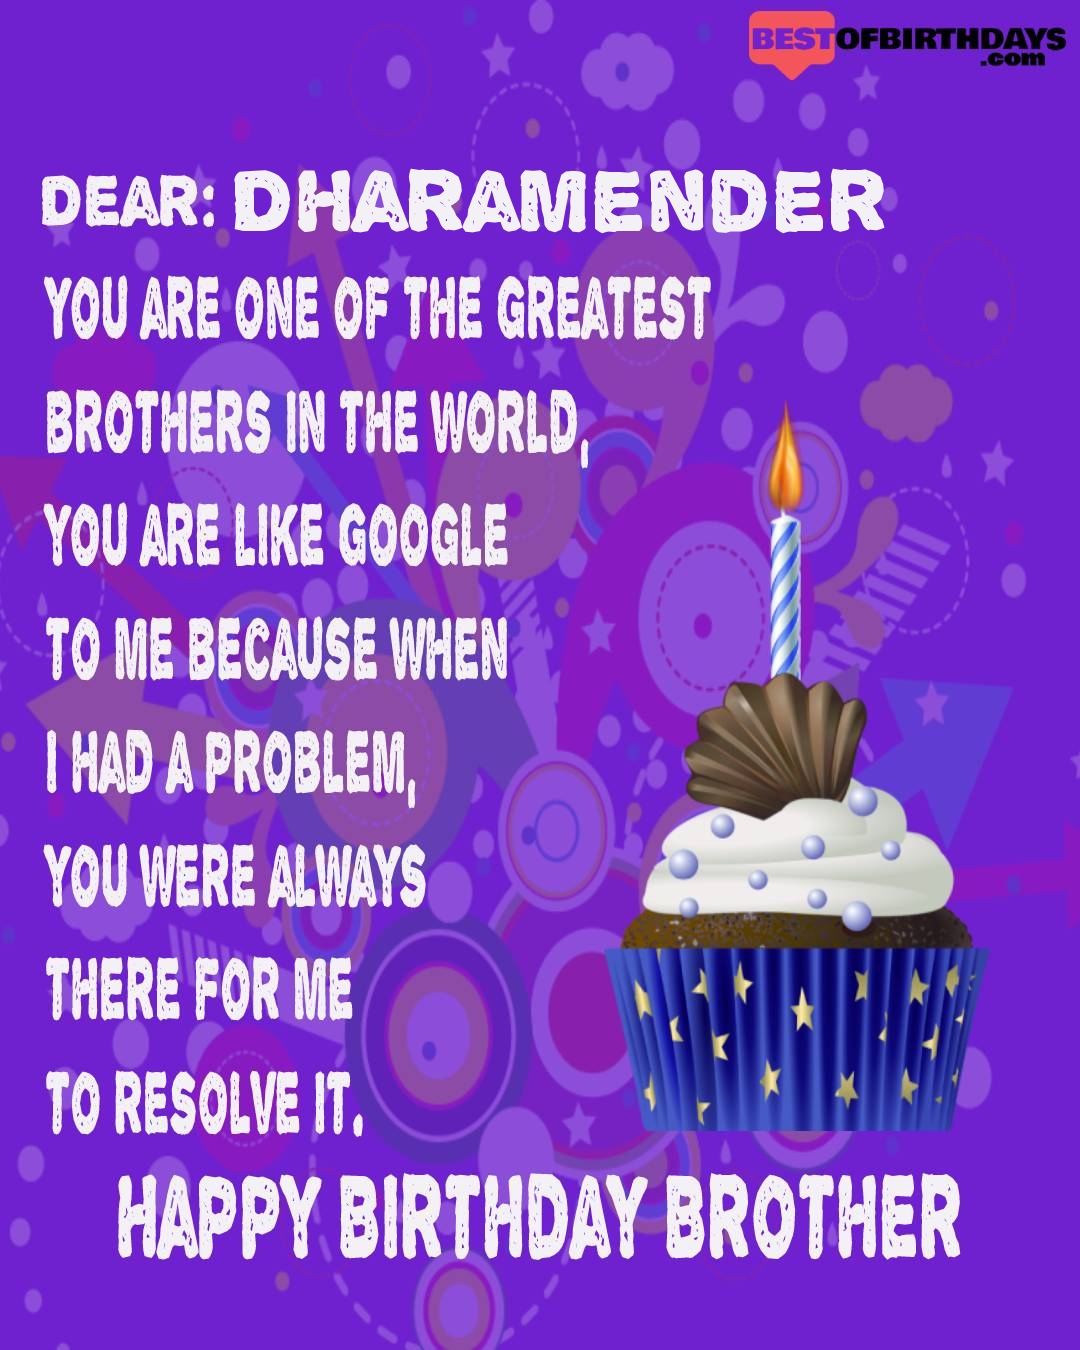 Happy birthday dharamender bhai brother bro